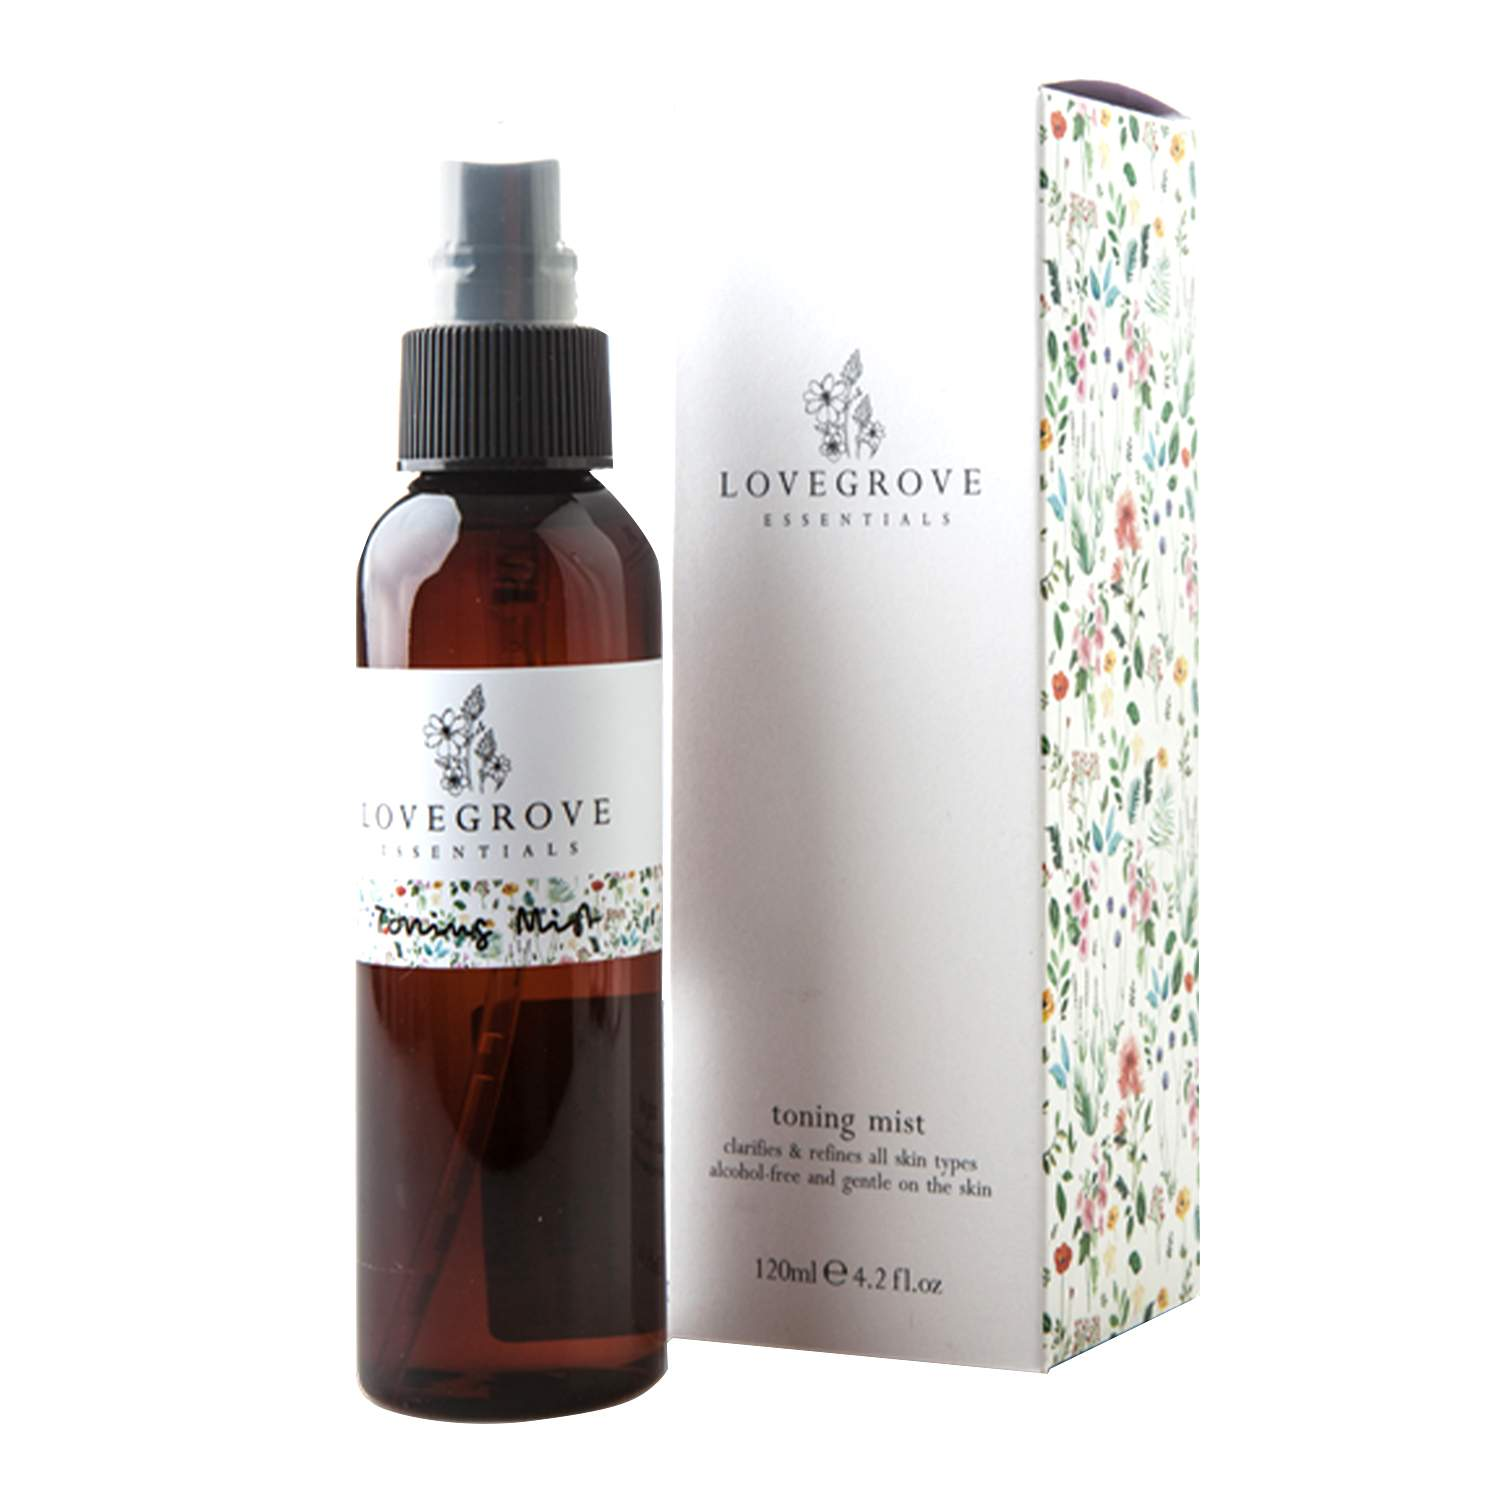 Lovegrove Essentials Toning Mist Lovegrove Essentials Toning Mist 1